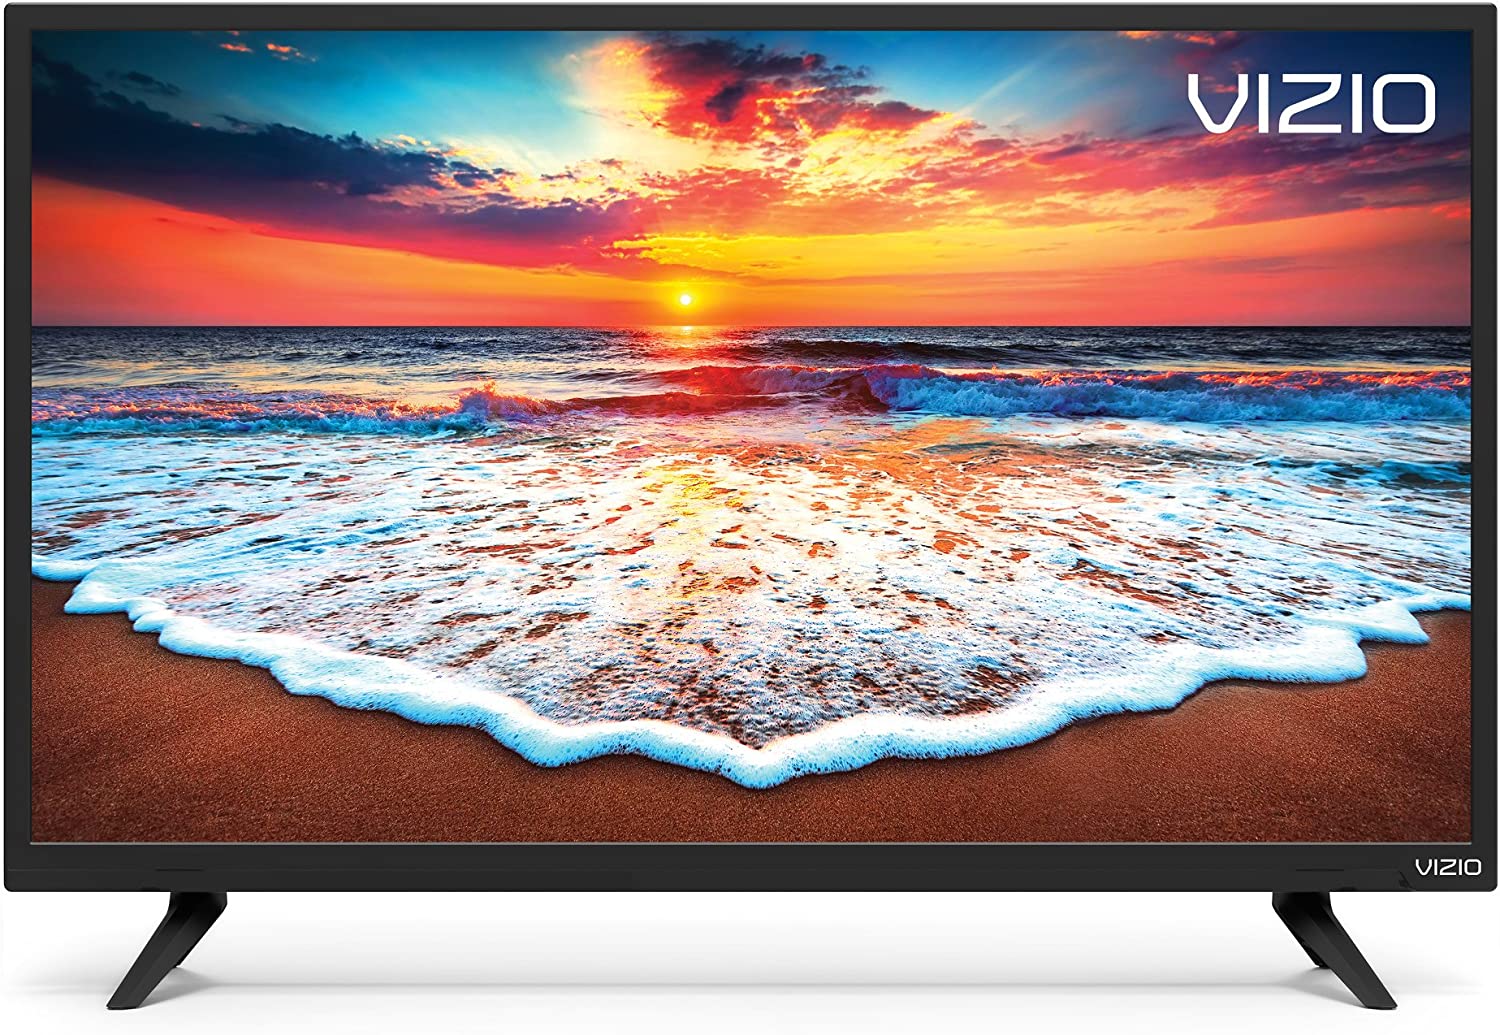 VIZIO 32 Class HD (720p) Smart LED TV